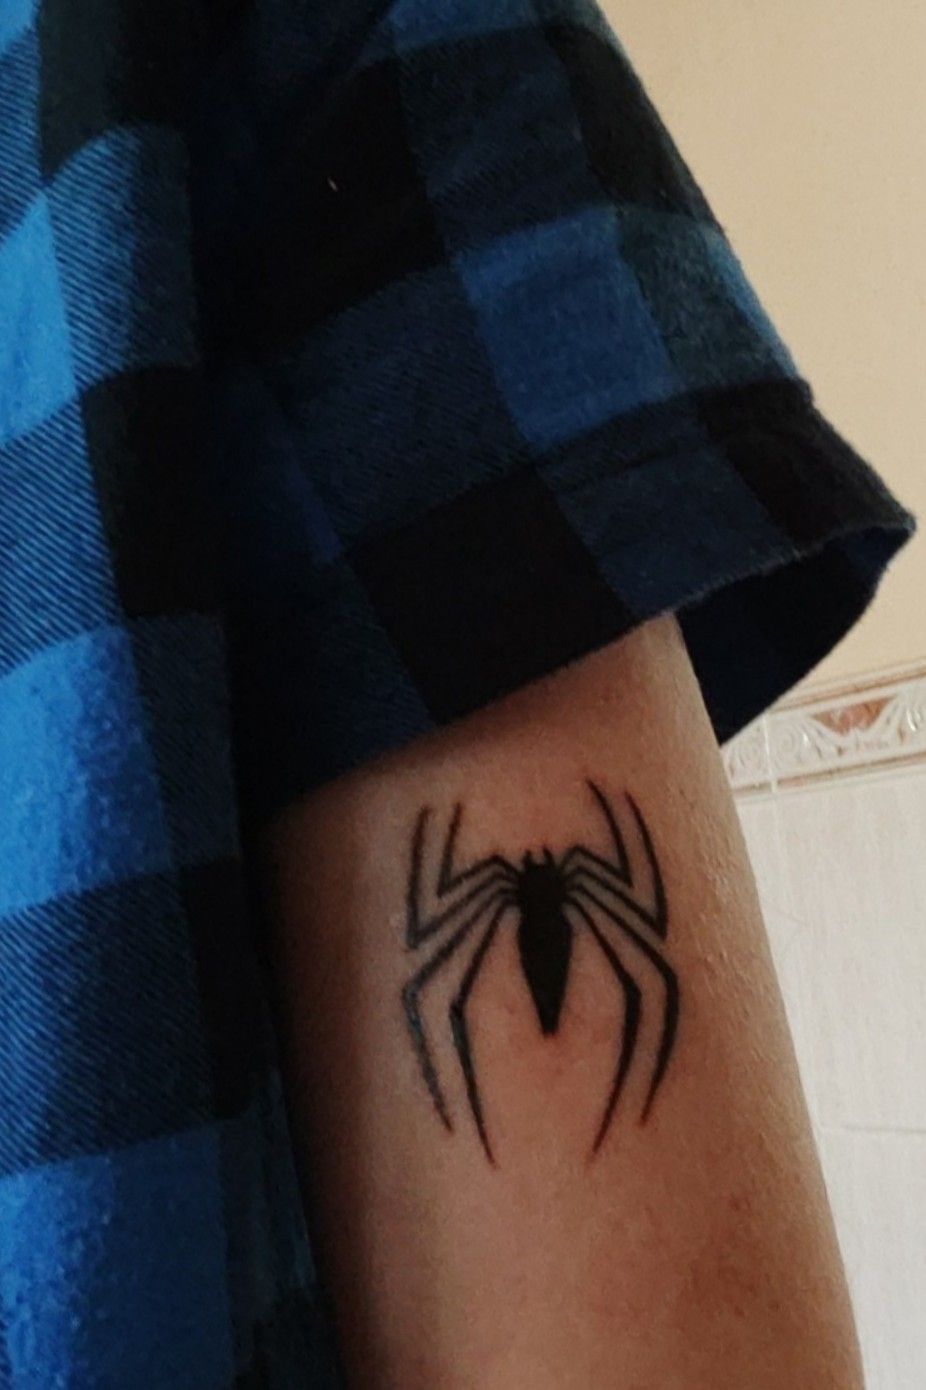 Fresh Spider-Man tattoo by Wyldish Bambino @ Bridge Street Tattoo, Chester.  : r/tattoos